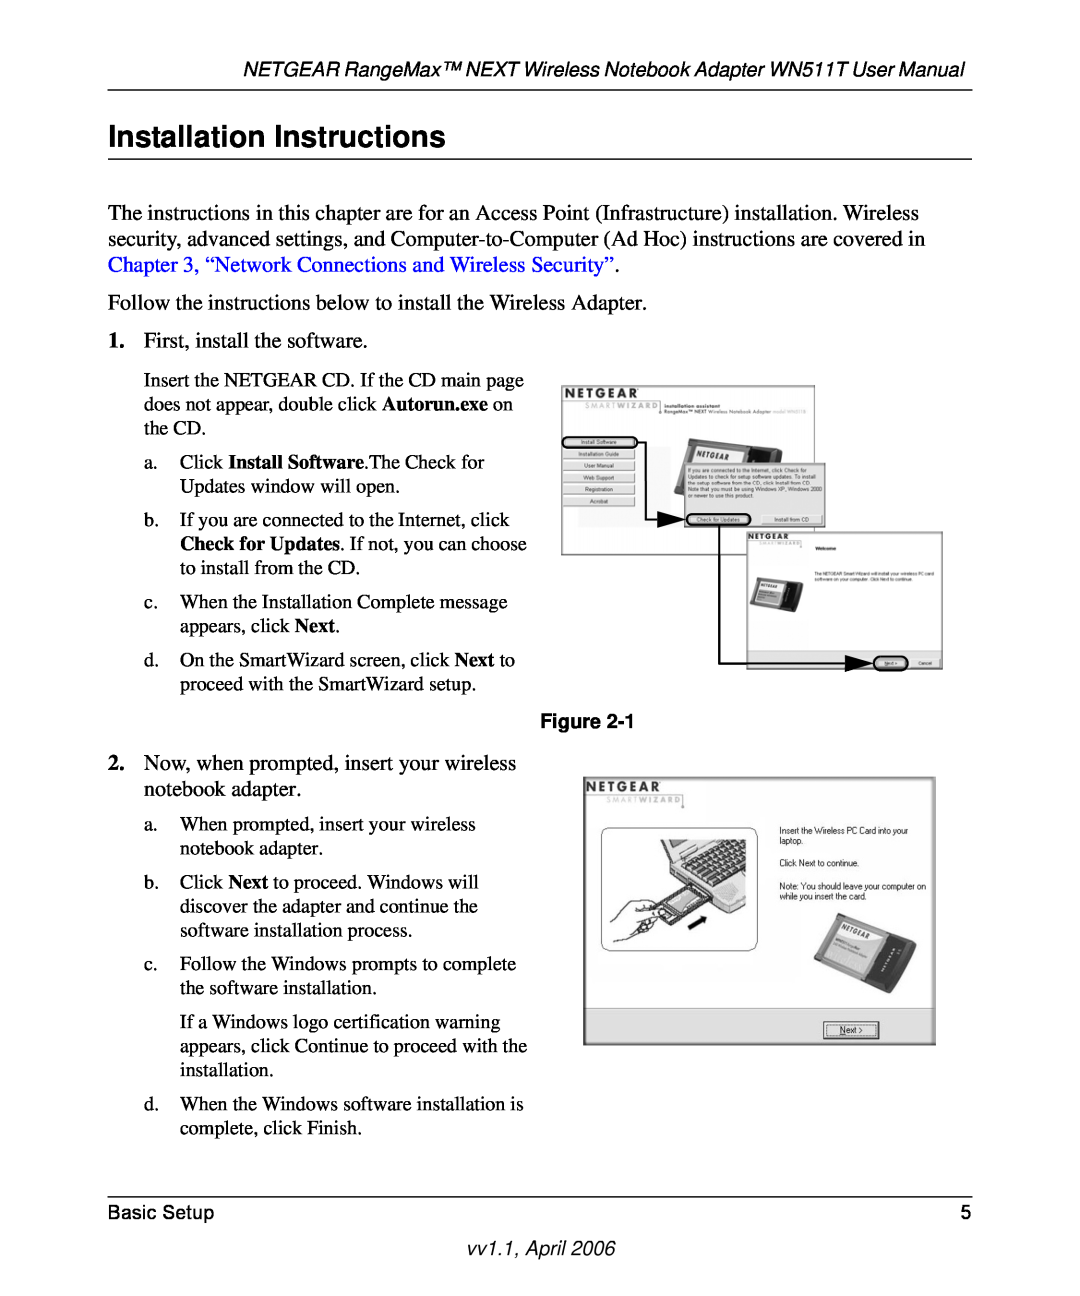 NETGEAR WN511T Installation Instructions, Follow the instructions below to install the Wireless Adapter, vv1.1, April 